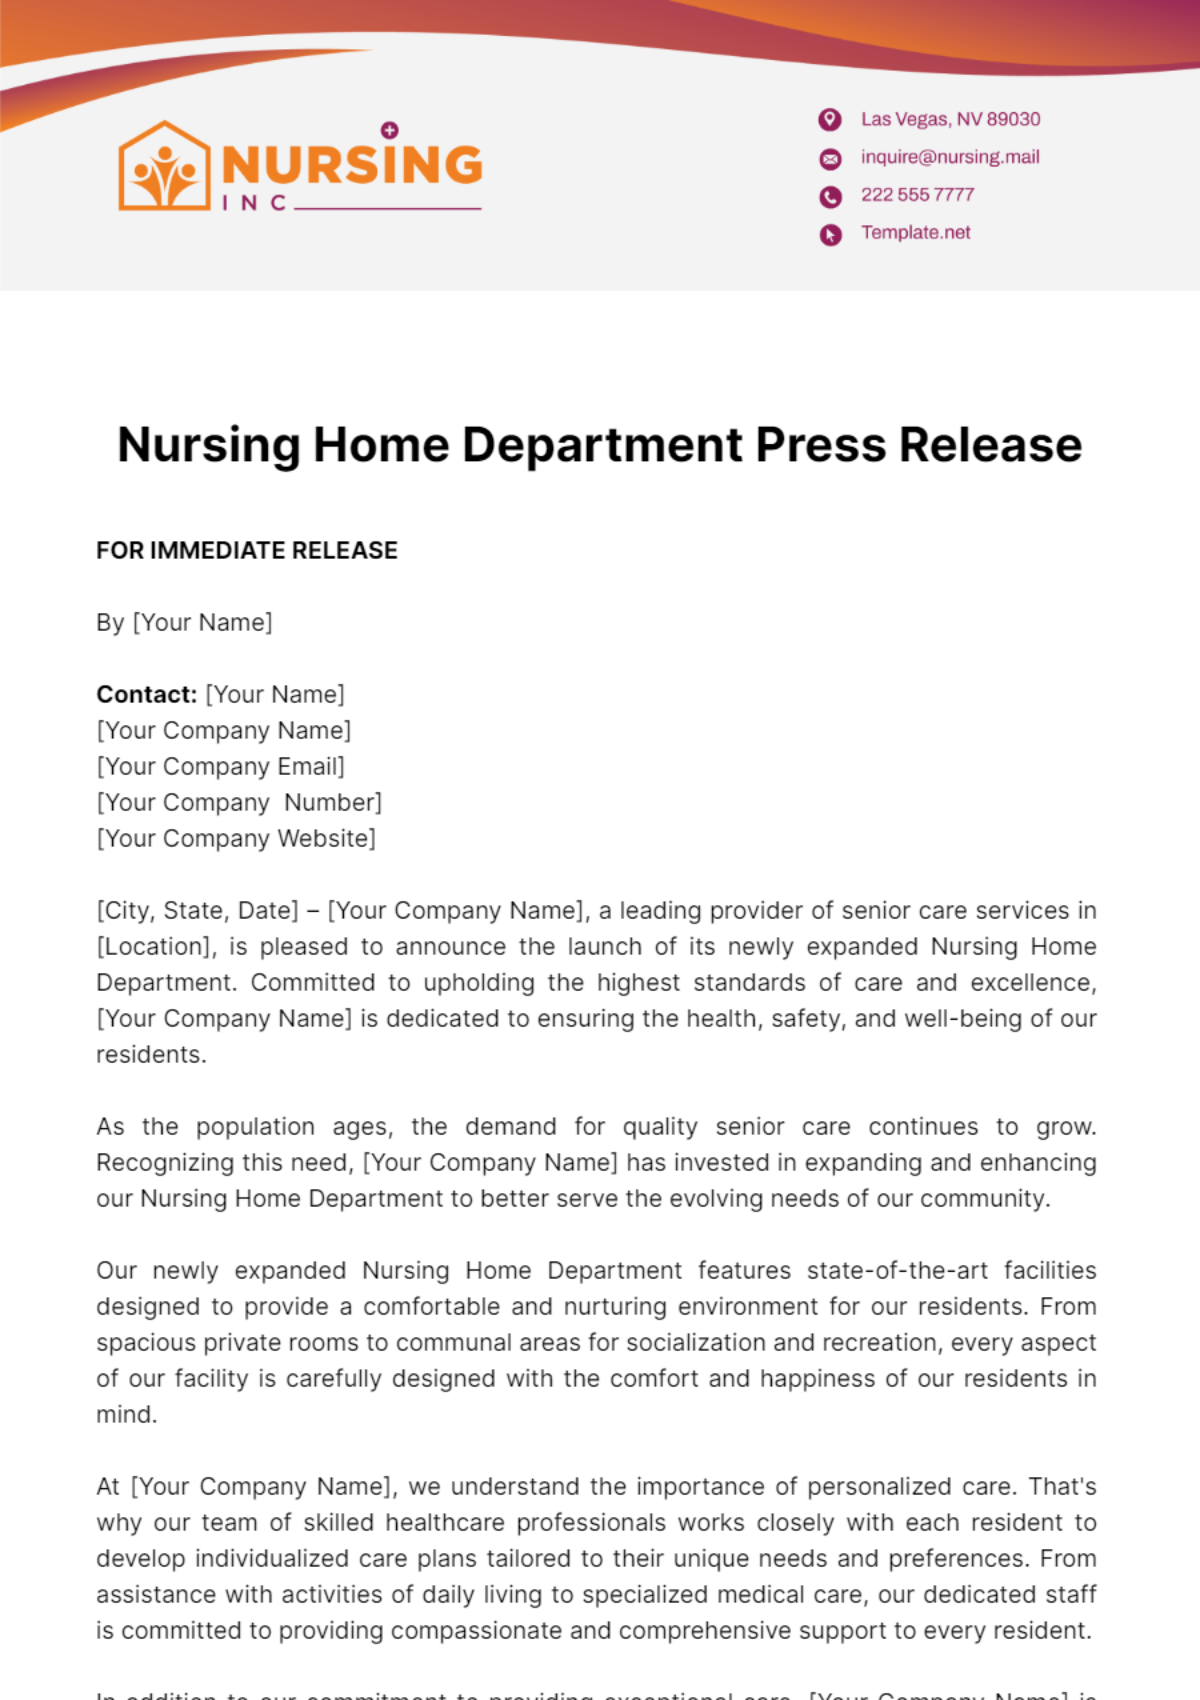 Nursing Home Department Press Release Template